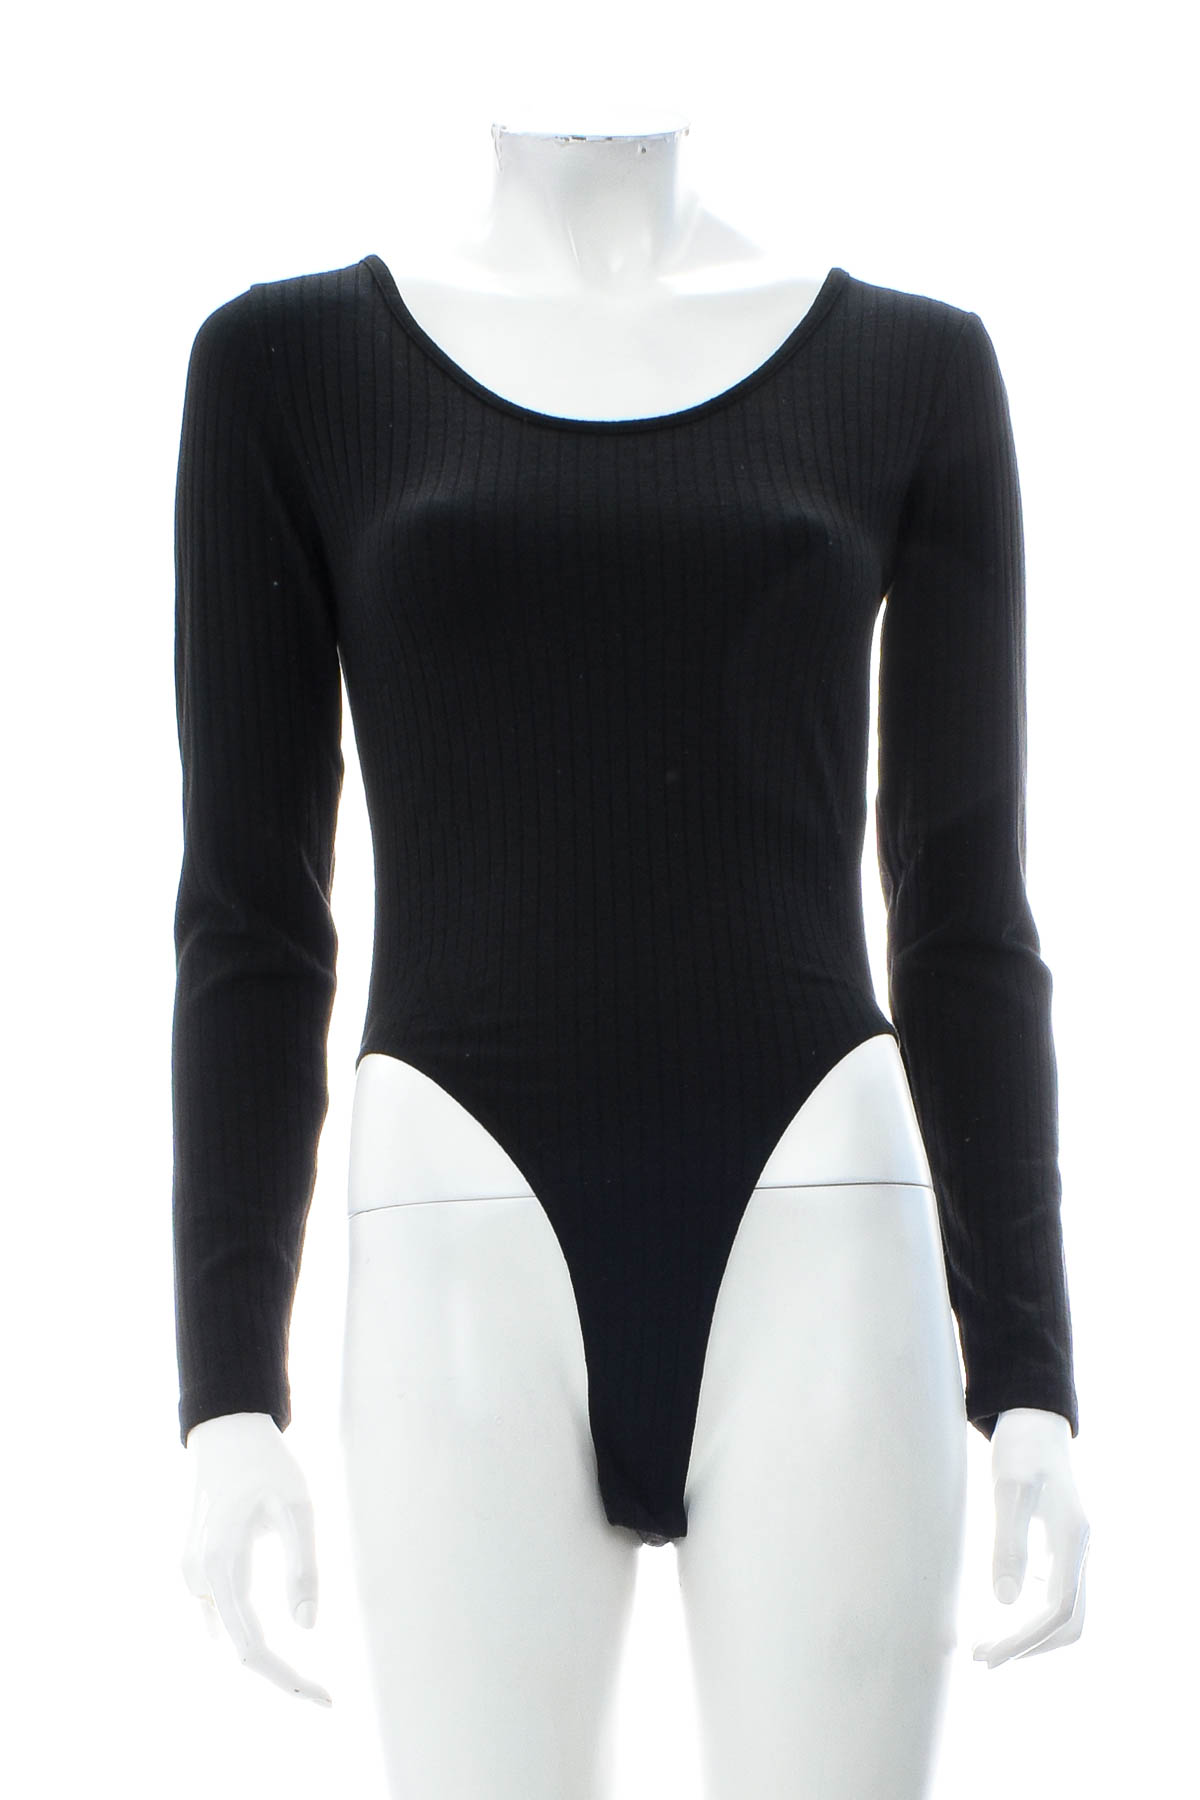 Woman's bodysuit - 0